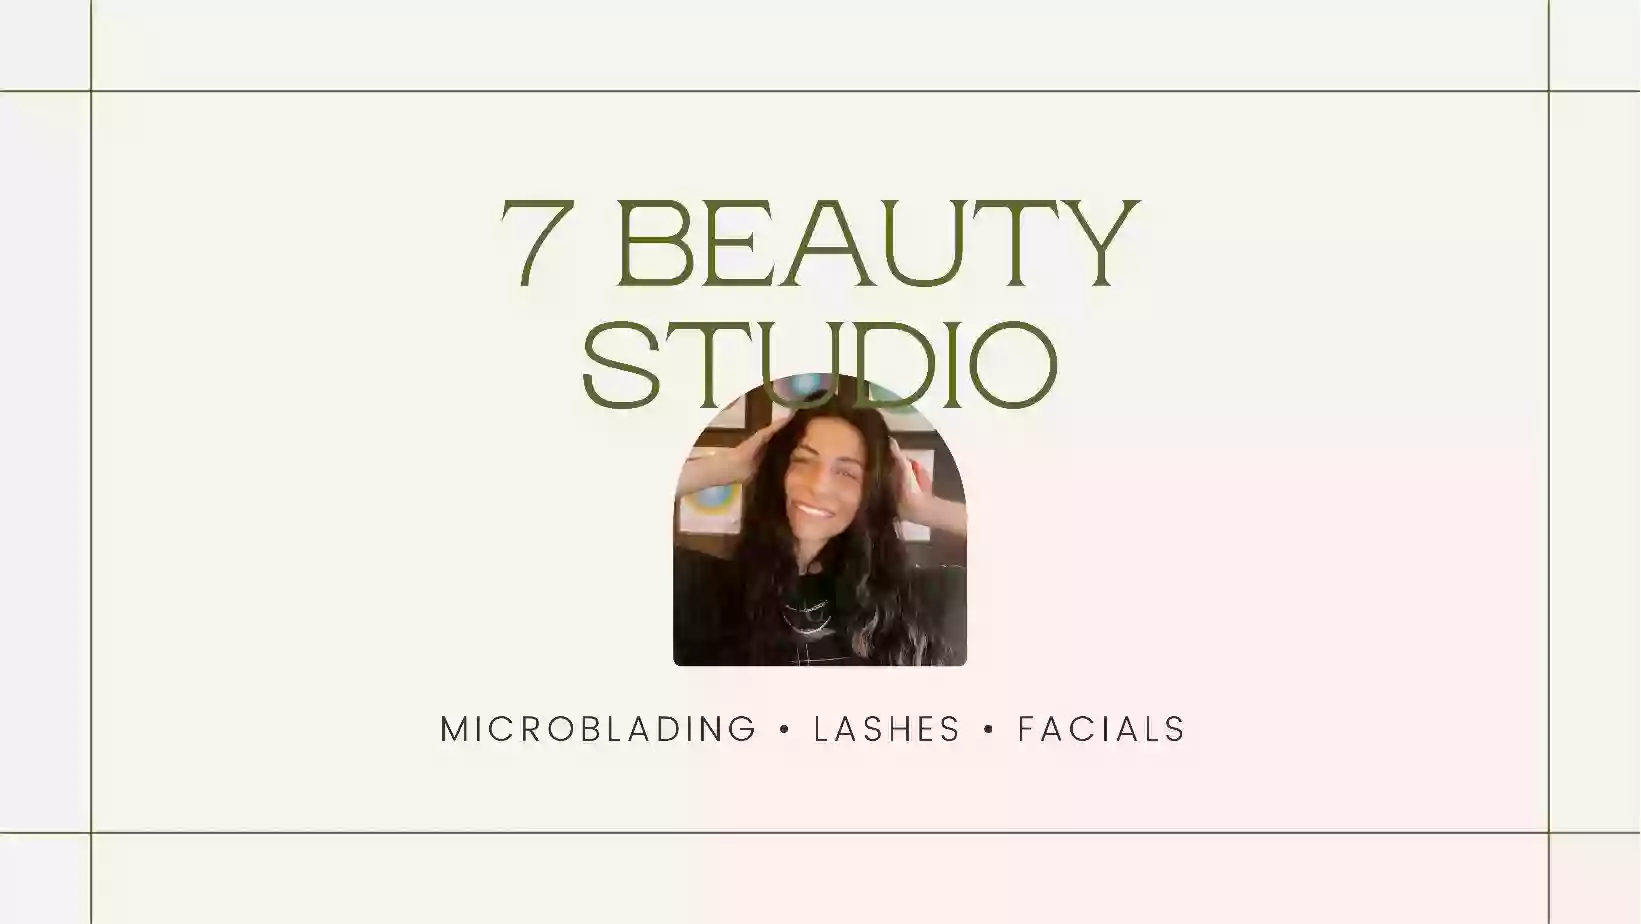 7 Beauty Studio